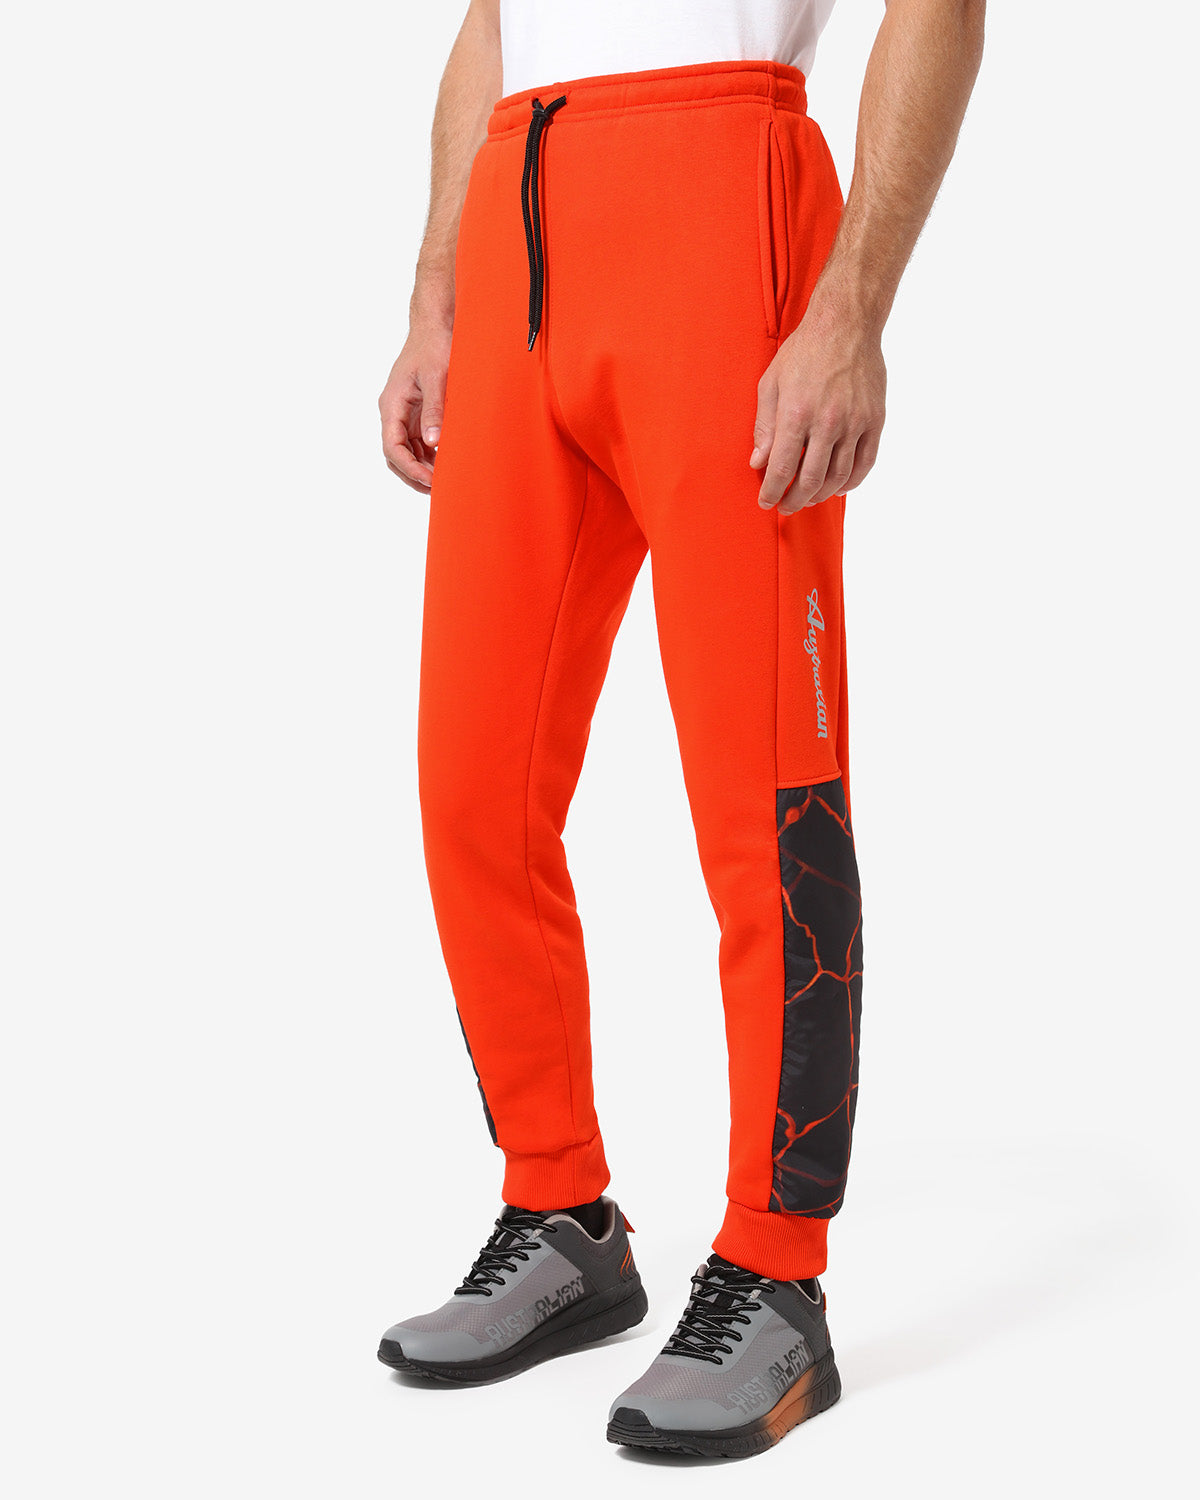 Magma Pant: Australian Sportswear